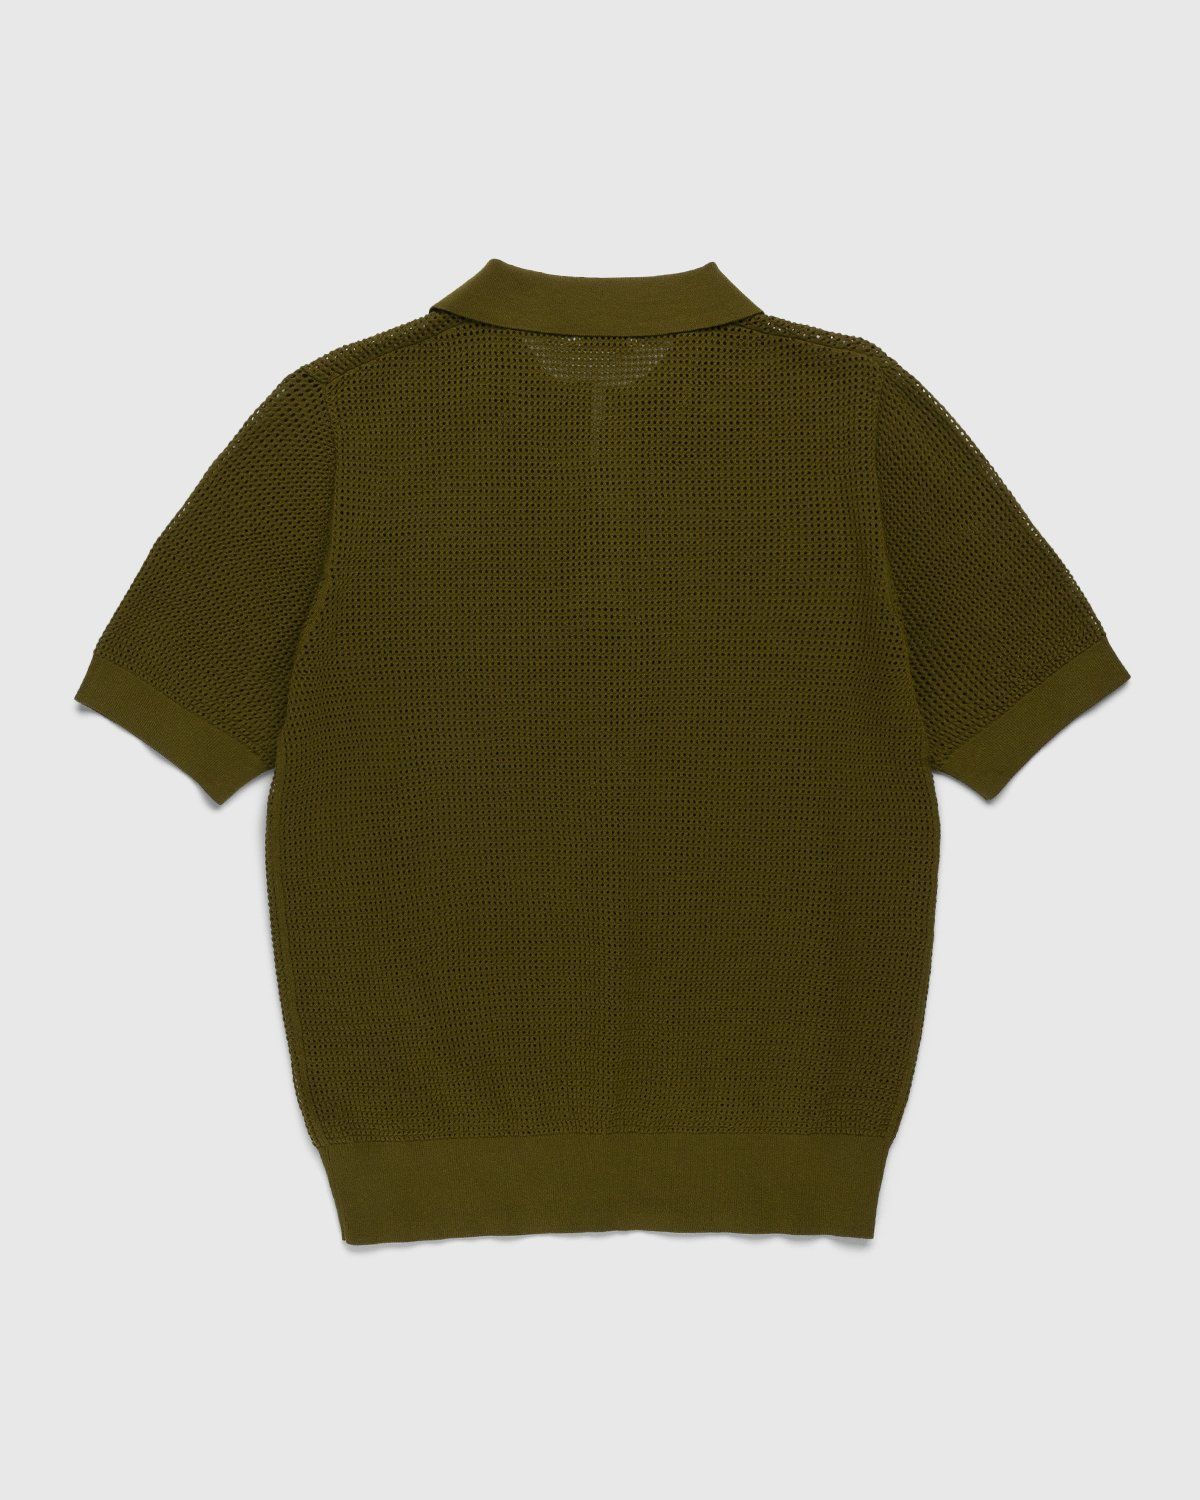 Dries van Noten – Jael Polo Shirt Olive - Shirts - Green - Image 2